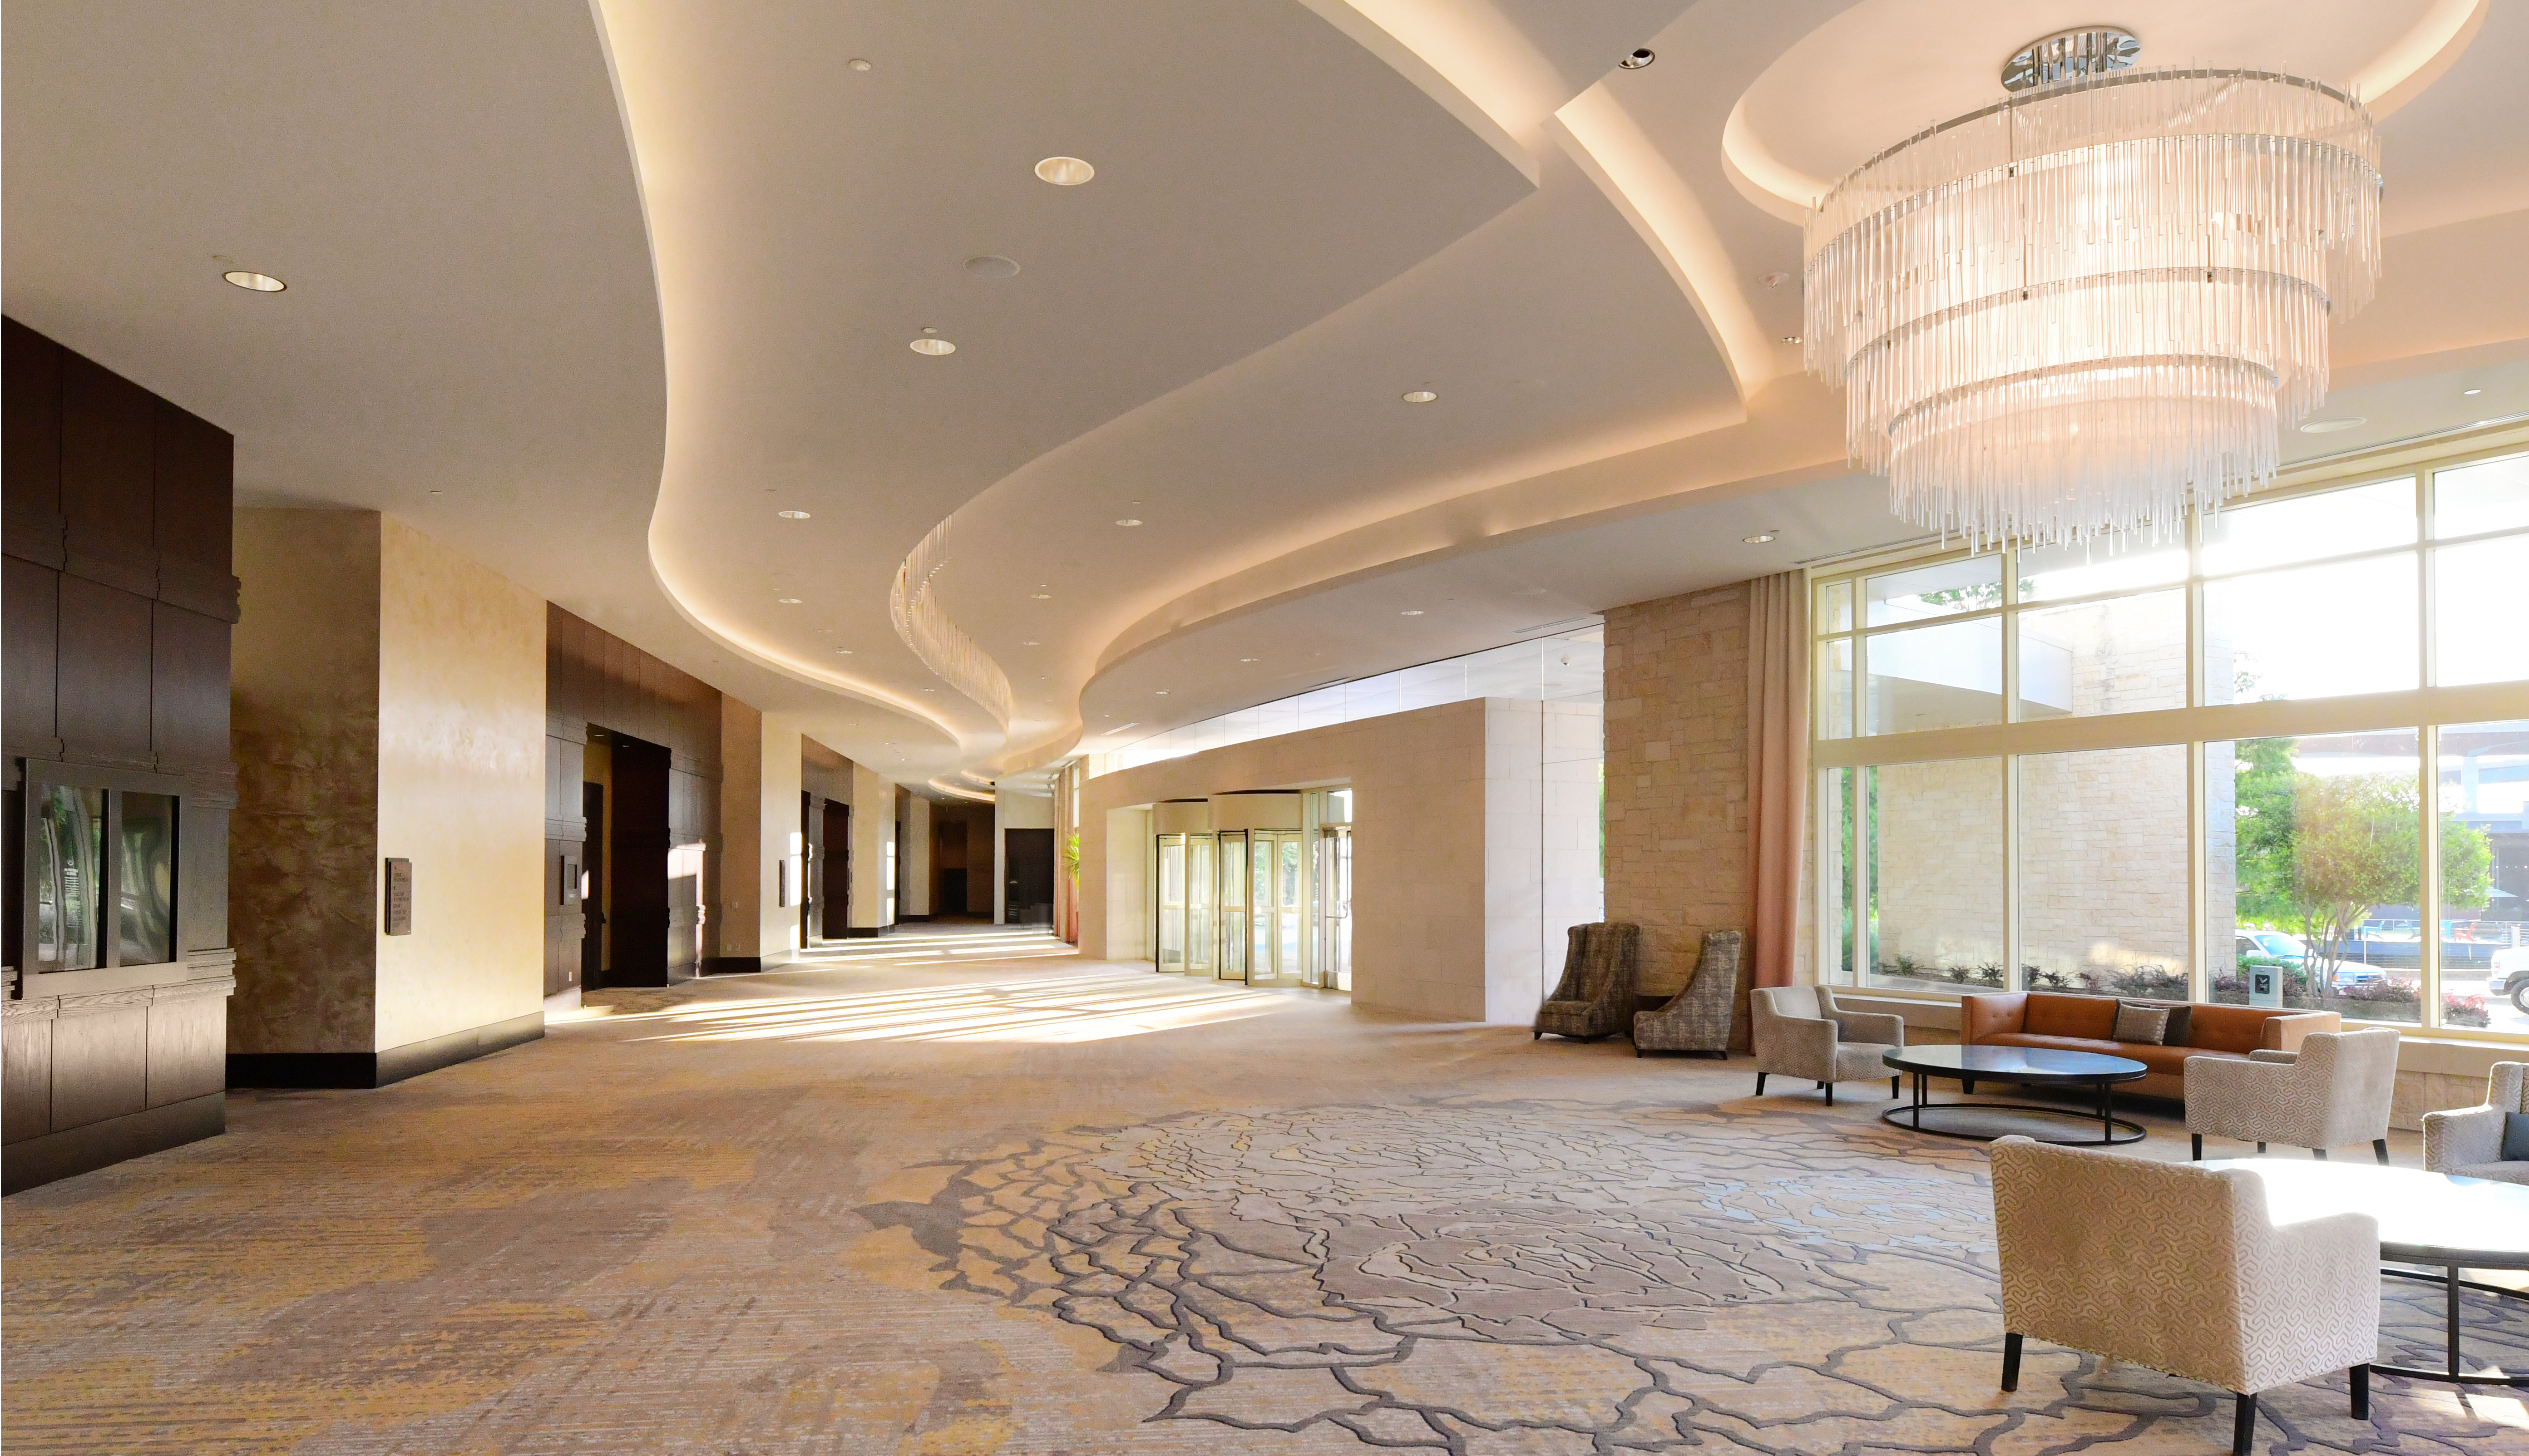 Prairie Ballroom Foyer featuring Elegant Settings & Natural Light